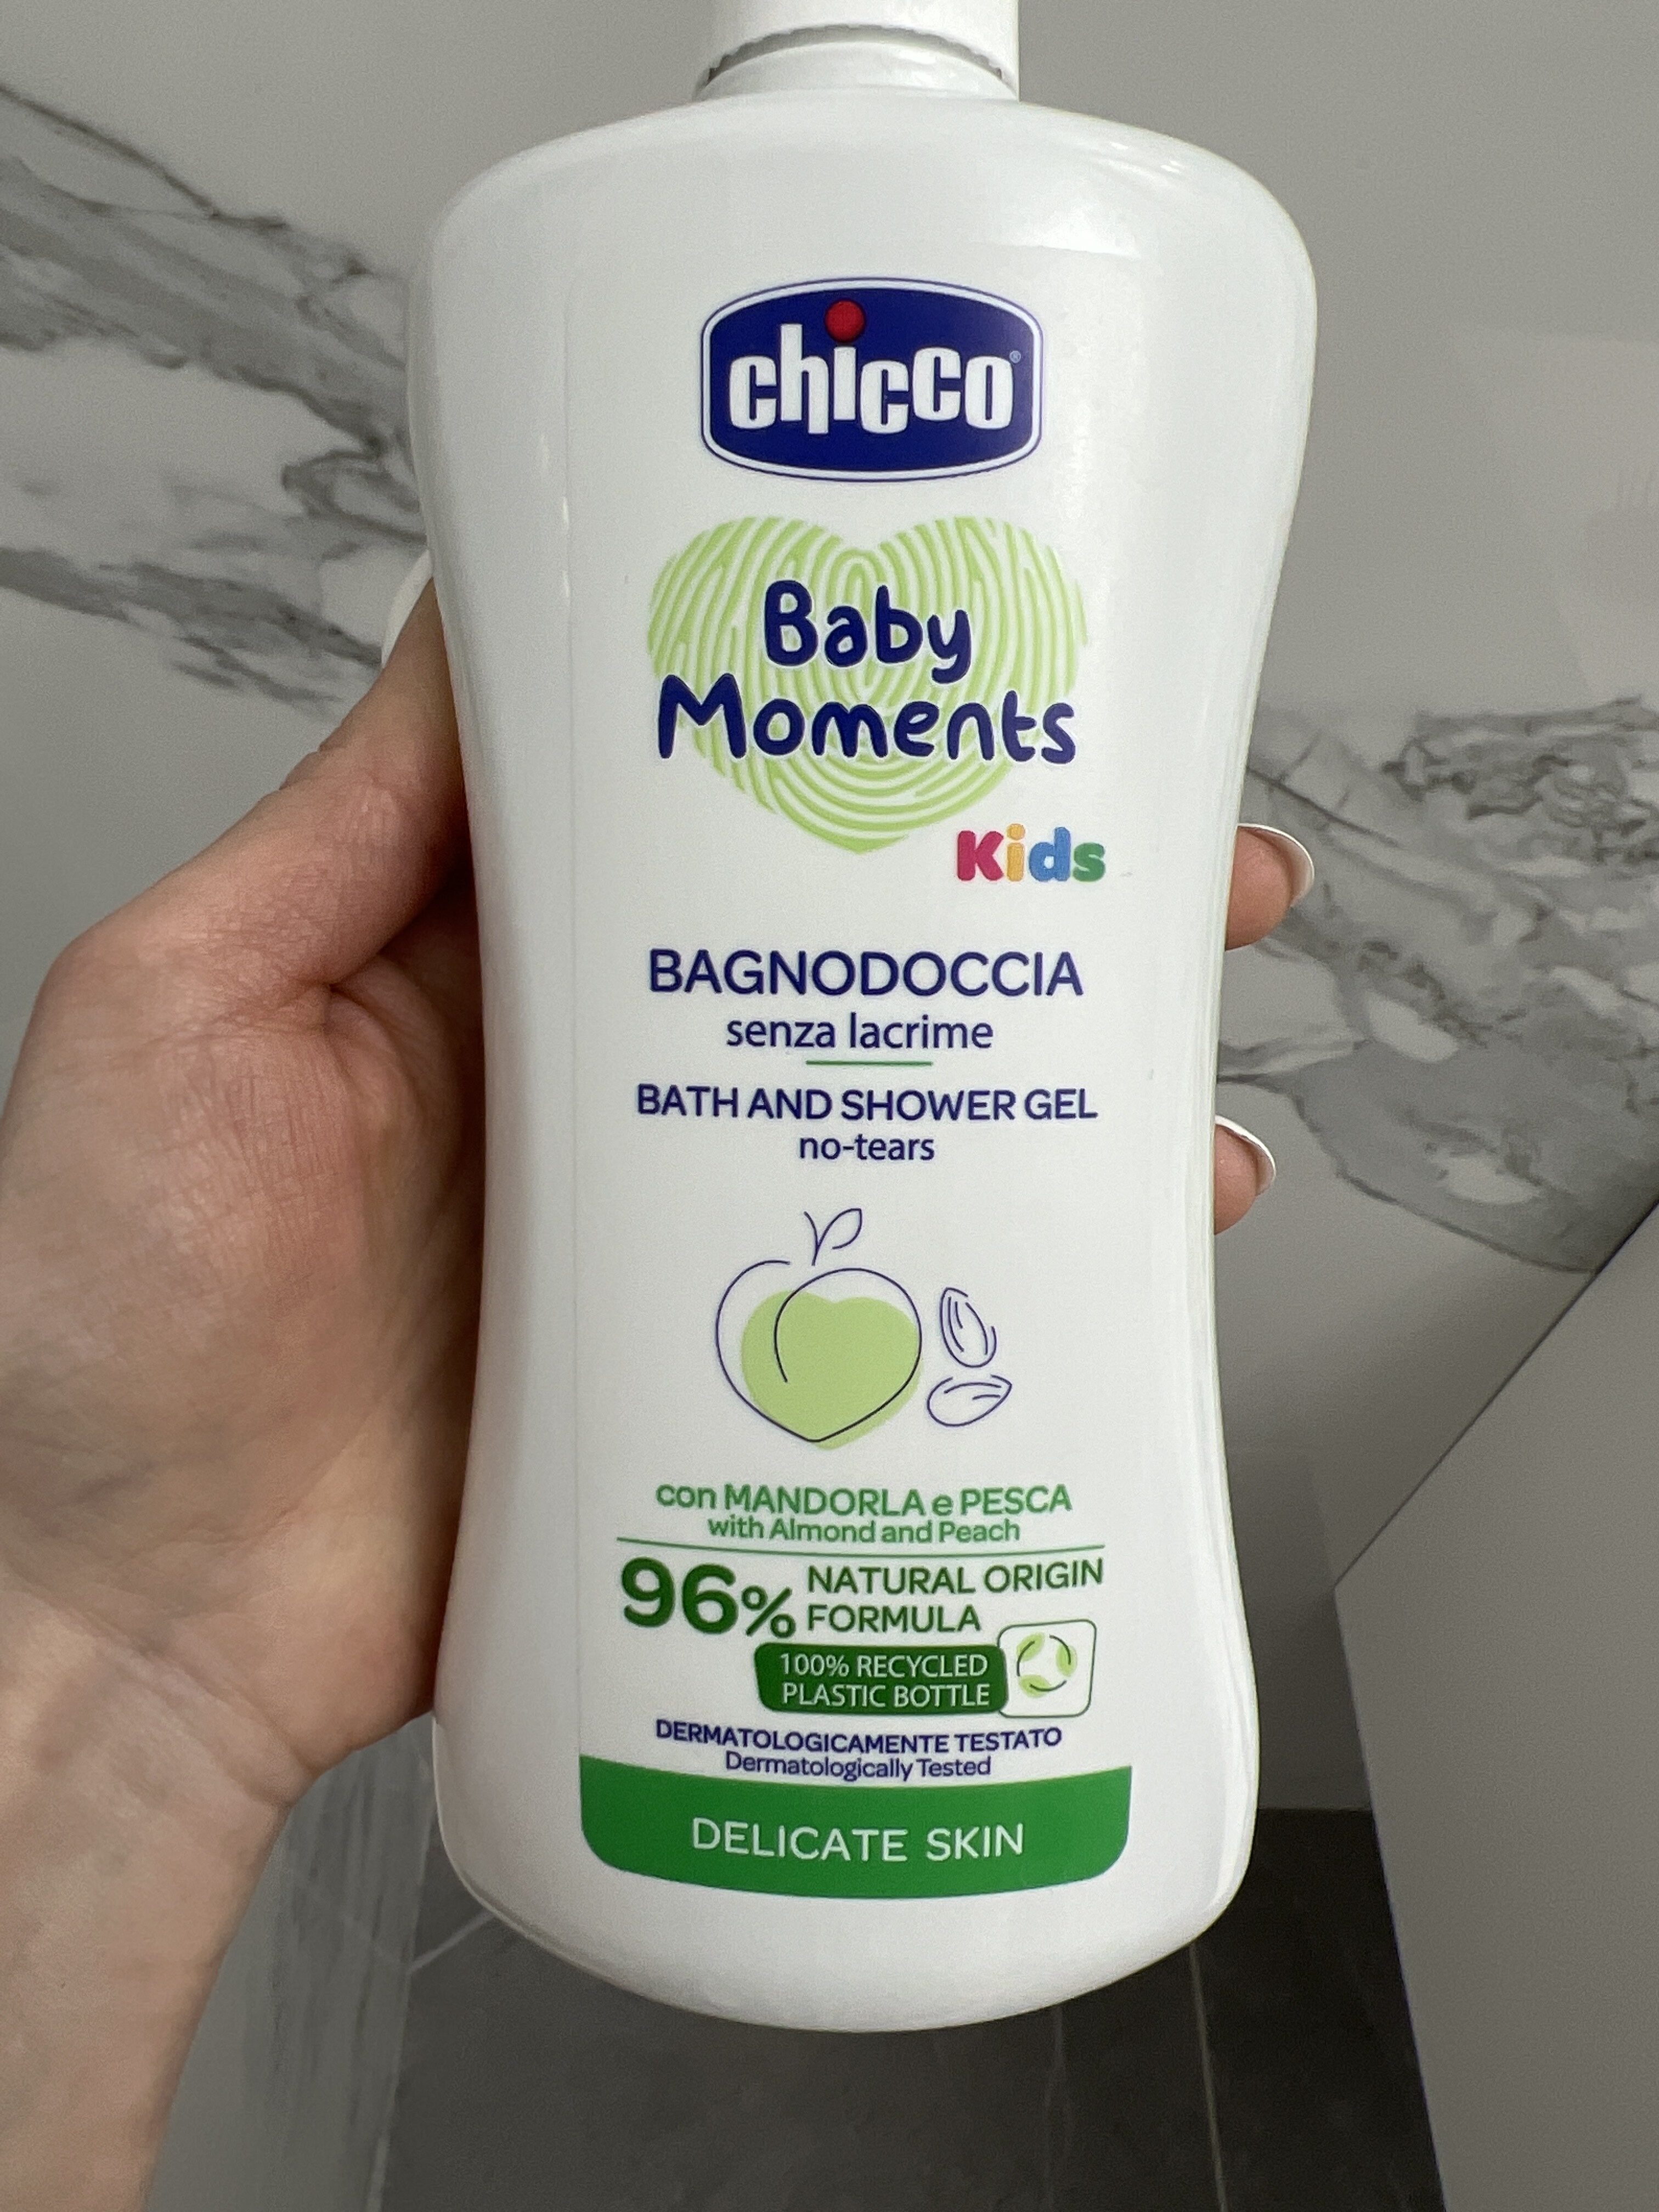 Bath and shower gel Baby Moments Kids - Produit - ru